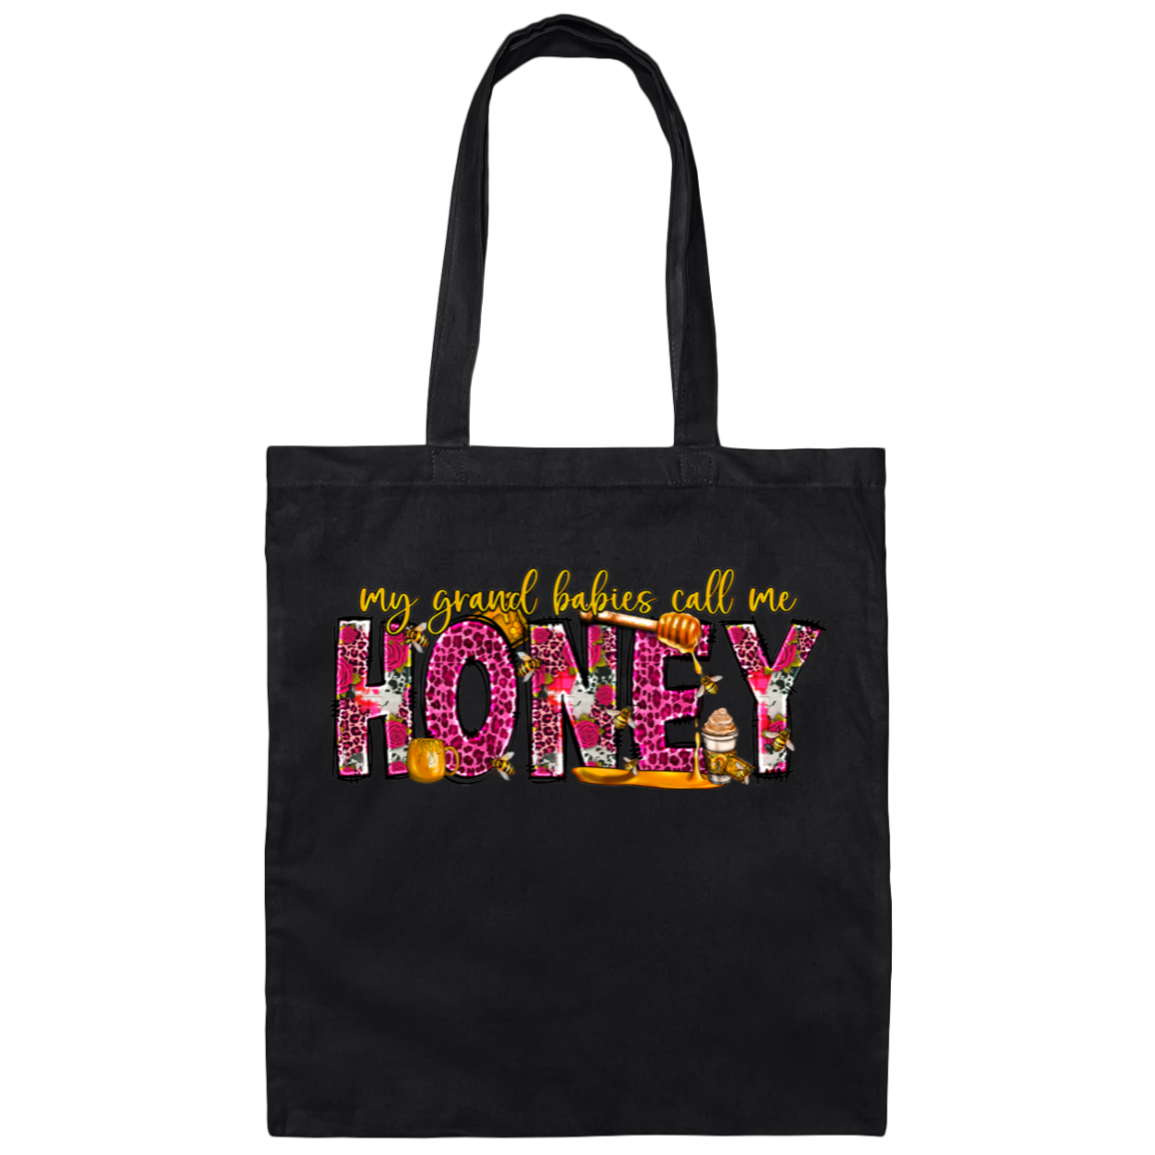 "My Grandbabies Call Me Honey" Canvas Tote Bag